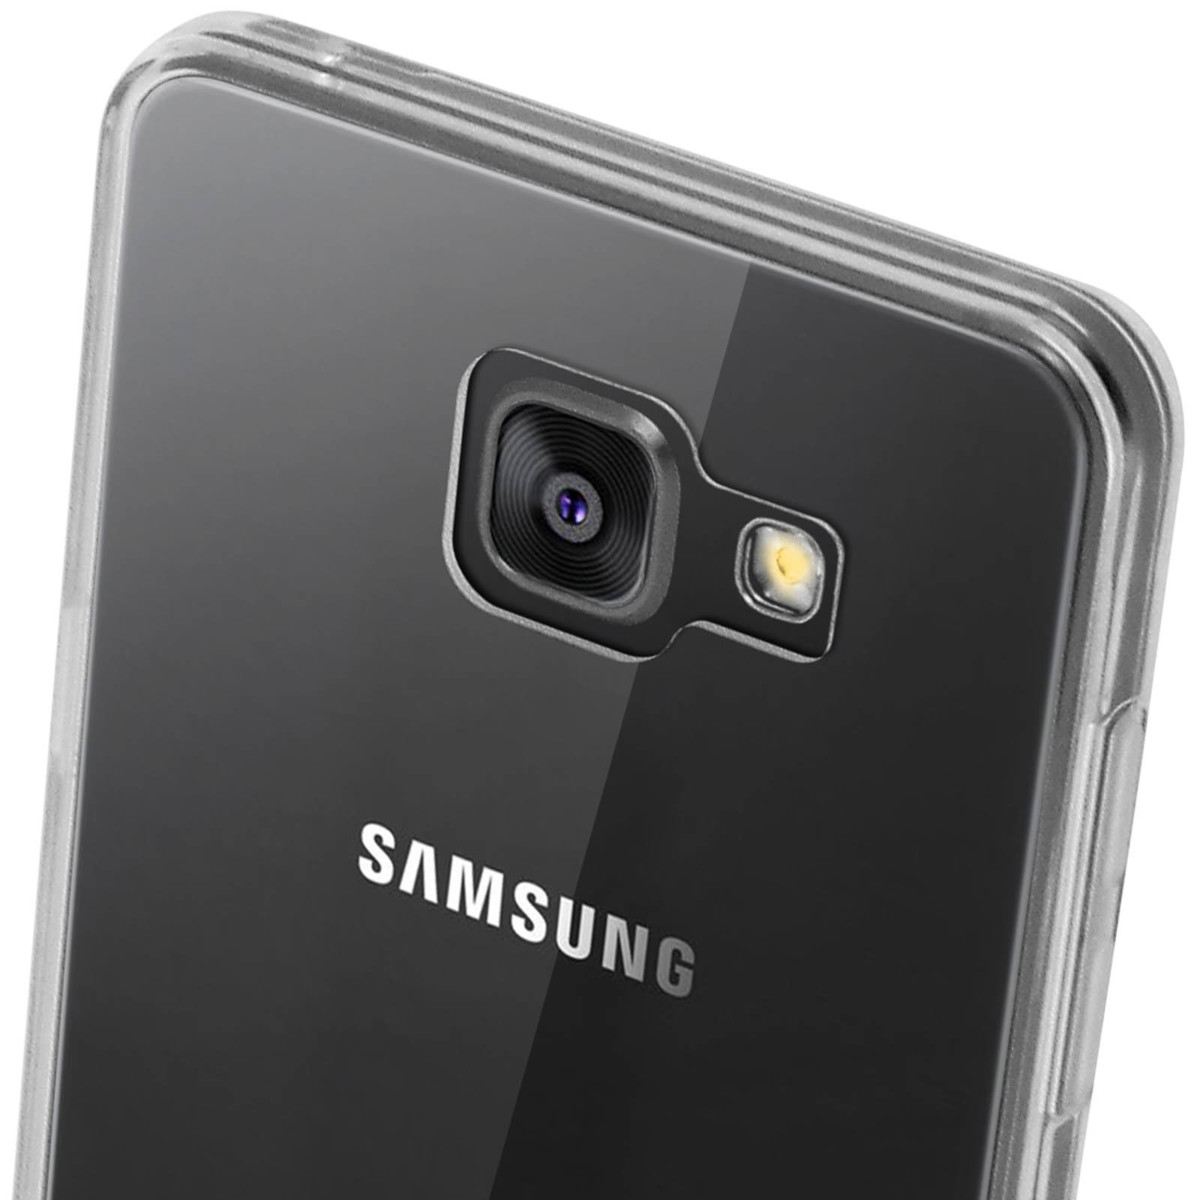 Coque crystal bumper transparente pour Samsung Galaxy A3 2016. Elle